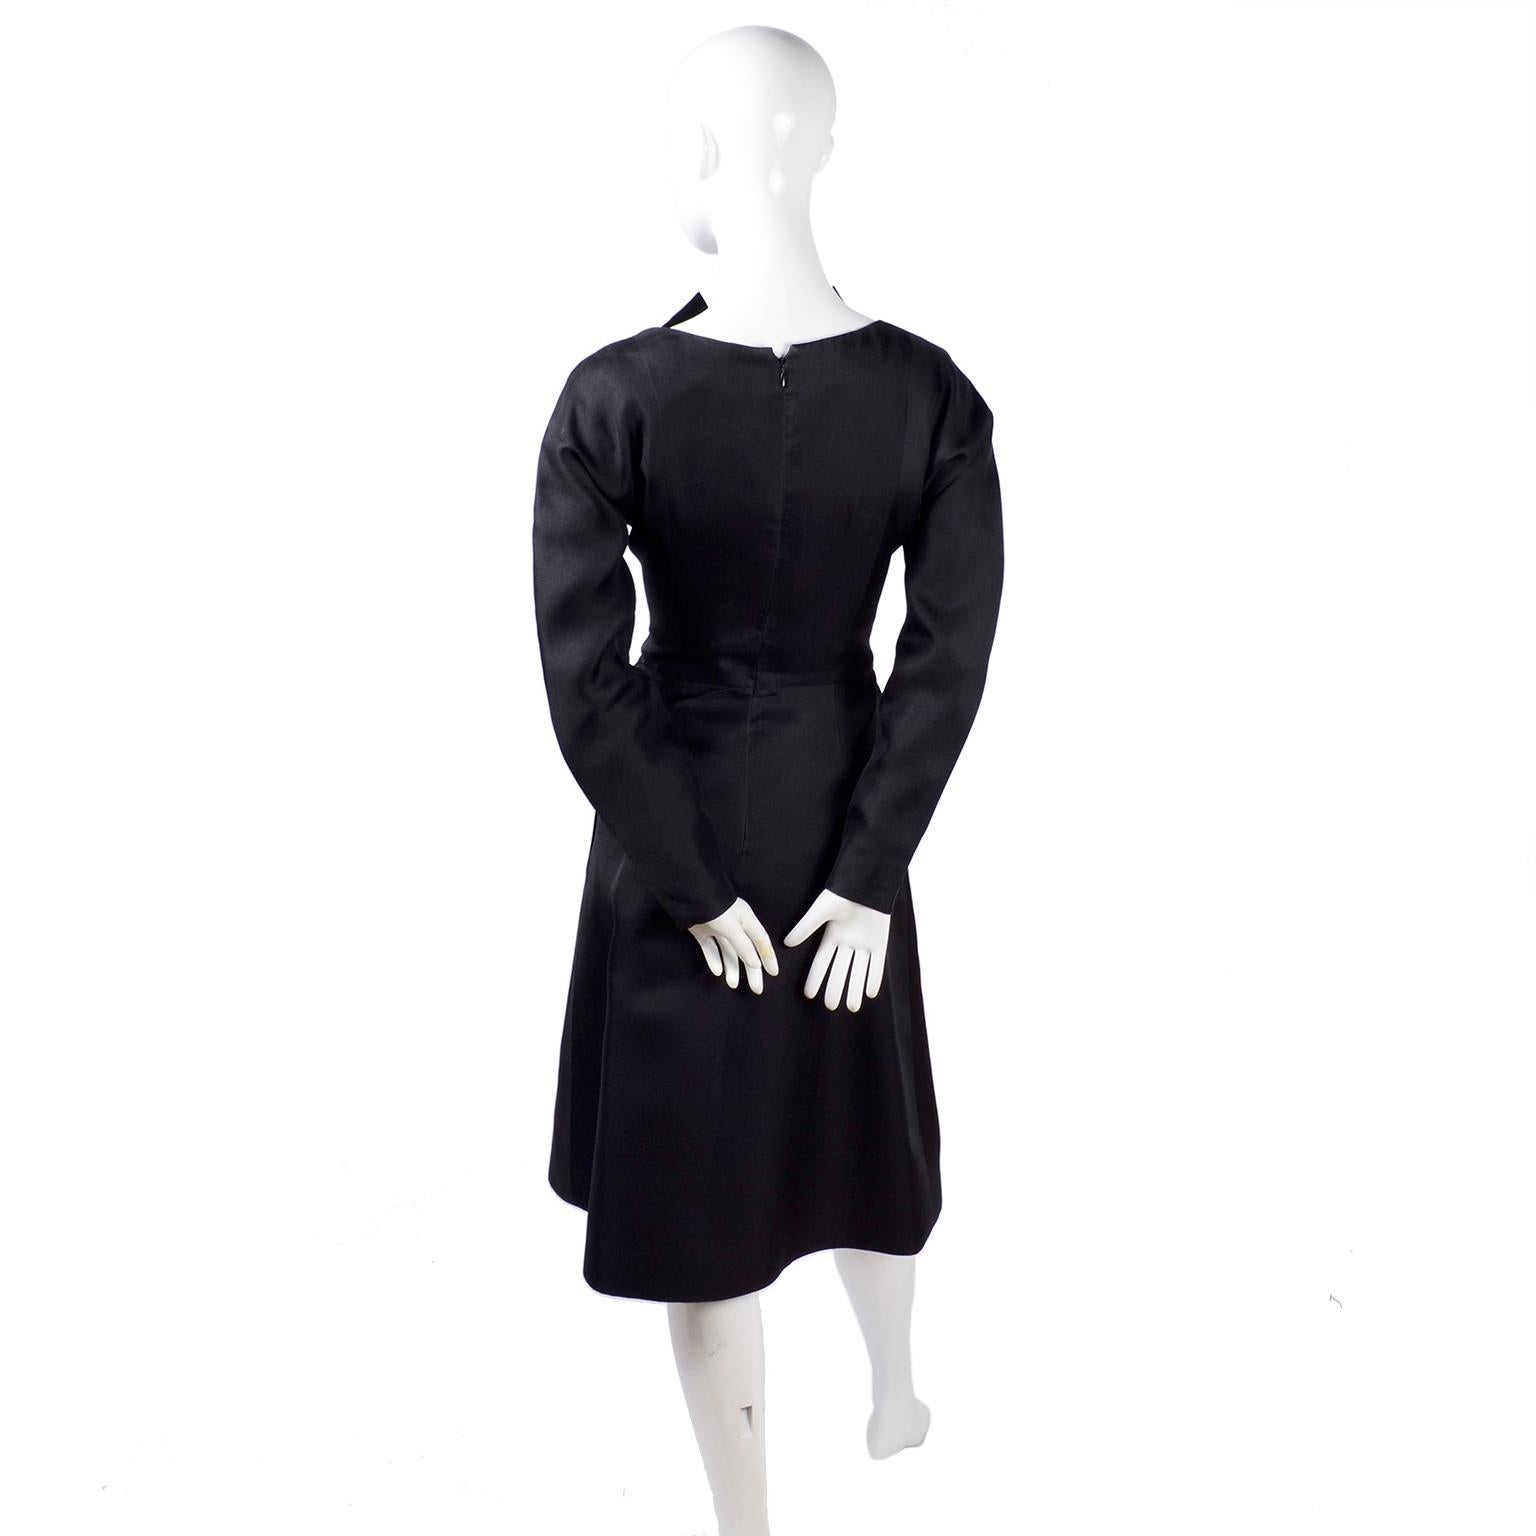 Vintage Black Geoffrey Beene Dress W/ Detailed Origami Folds & Styling 4